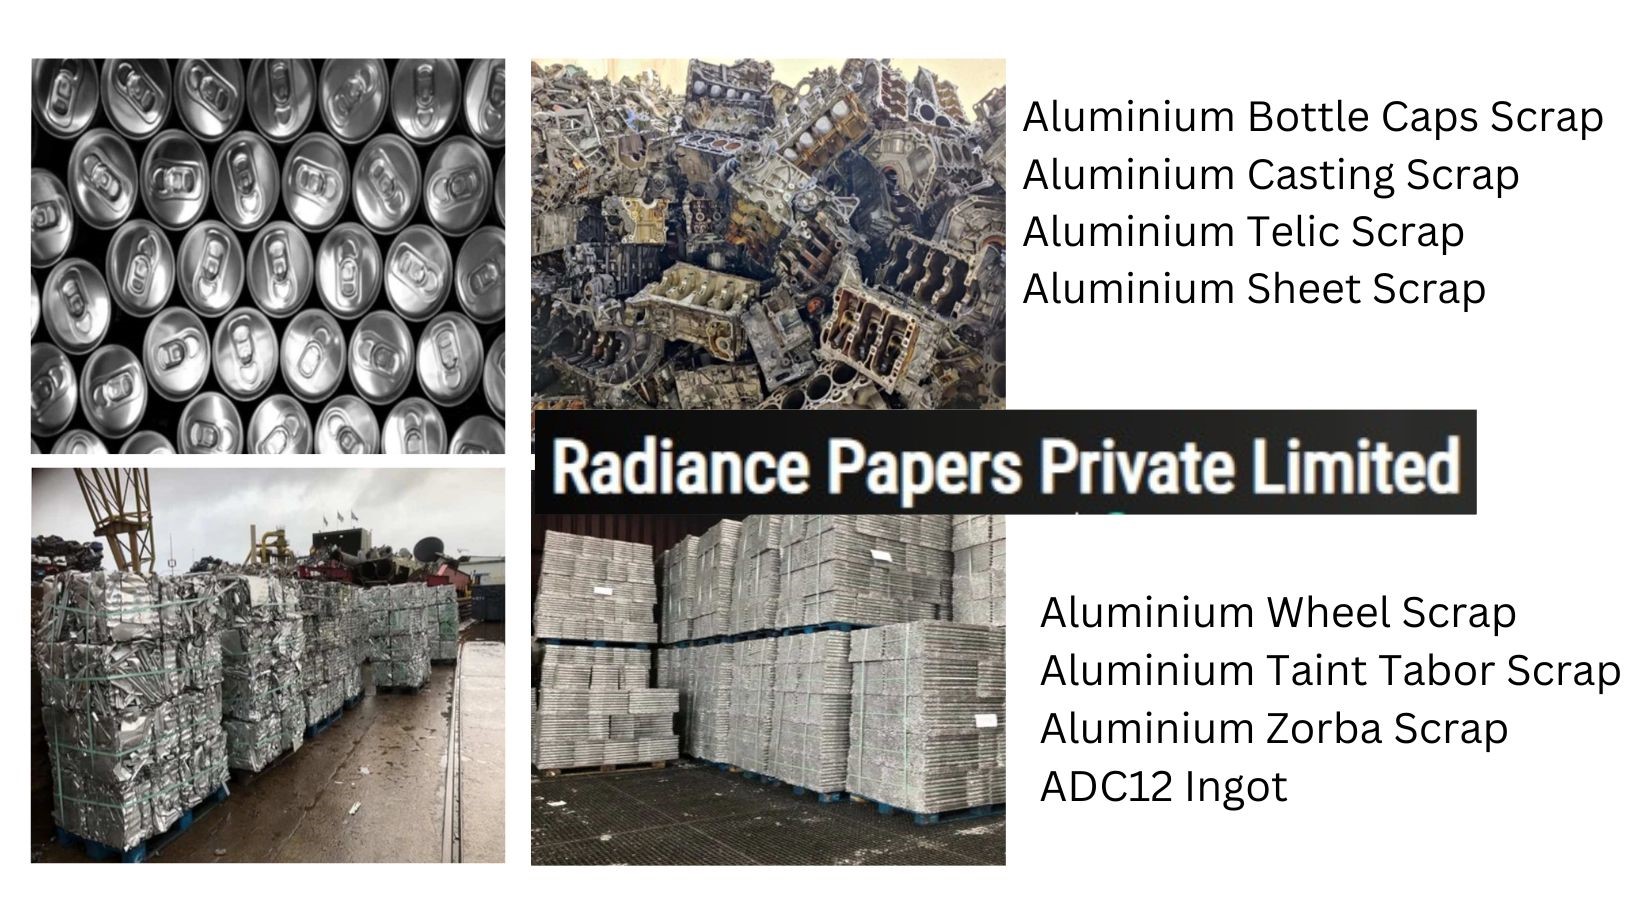 AL Biz欢迎Radiance Papers 私人有限公司加入其1700多家经过验证的铝销售商的行列